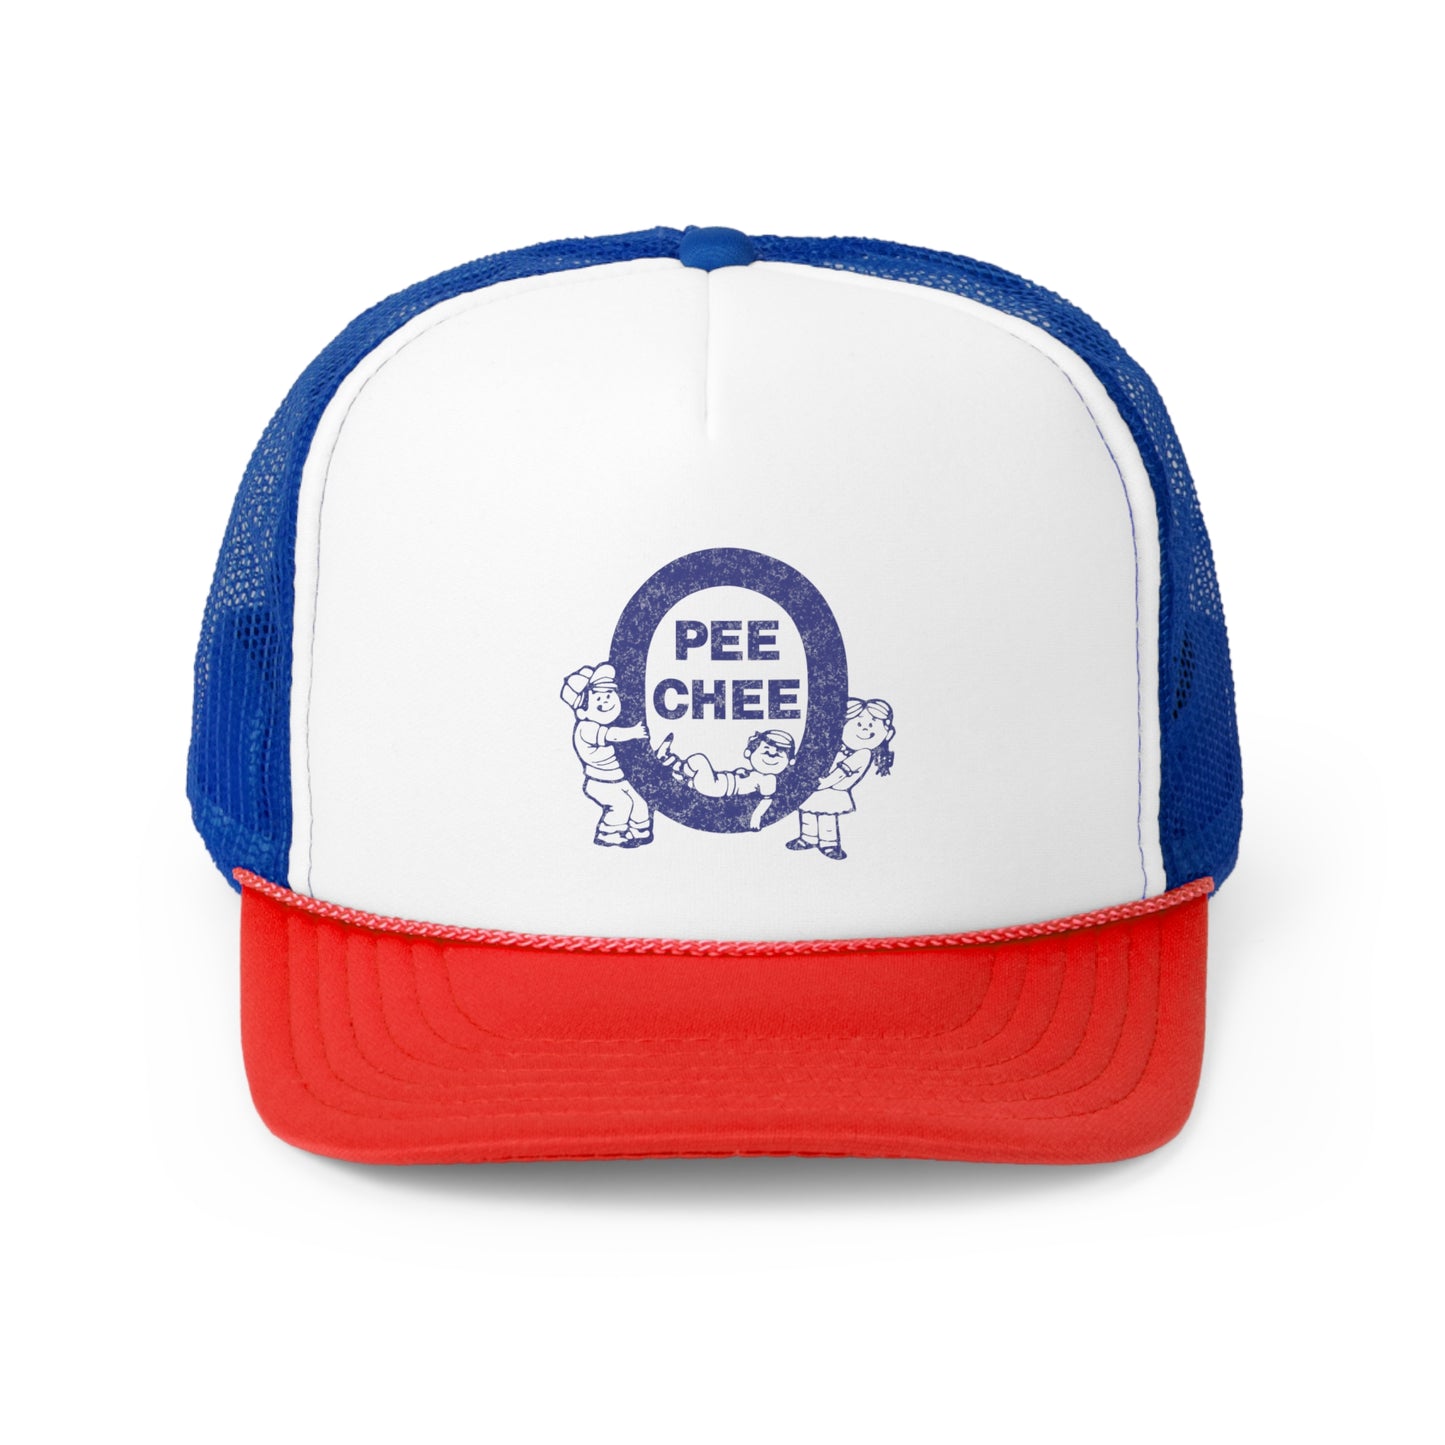 O Pee Chee Canadian Nostalgia Trucker Cap Blue Distressed Logo